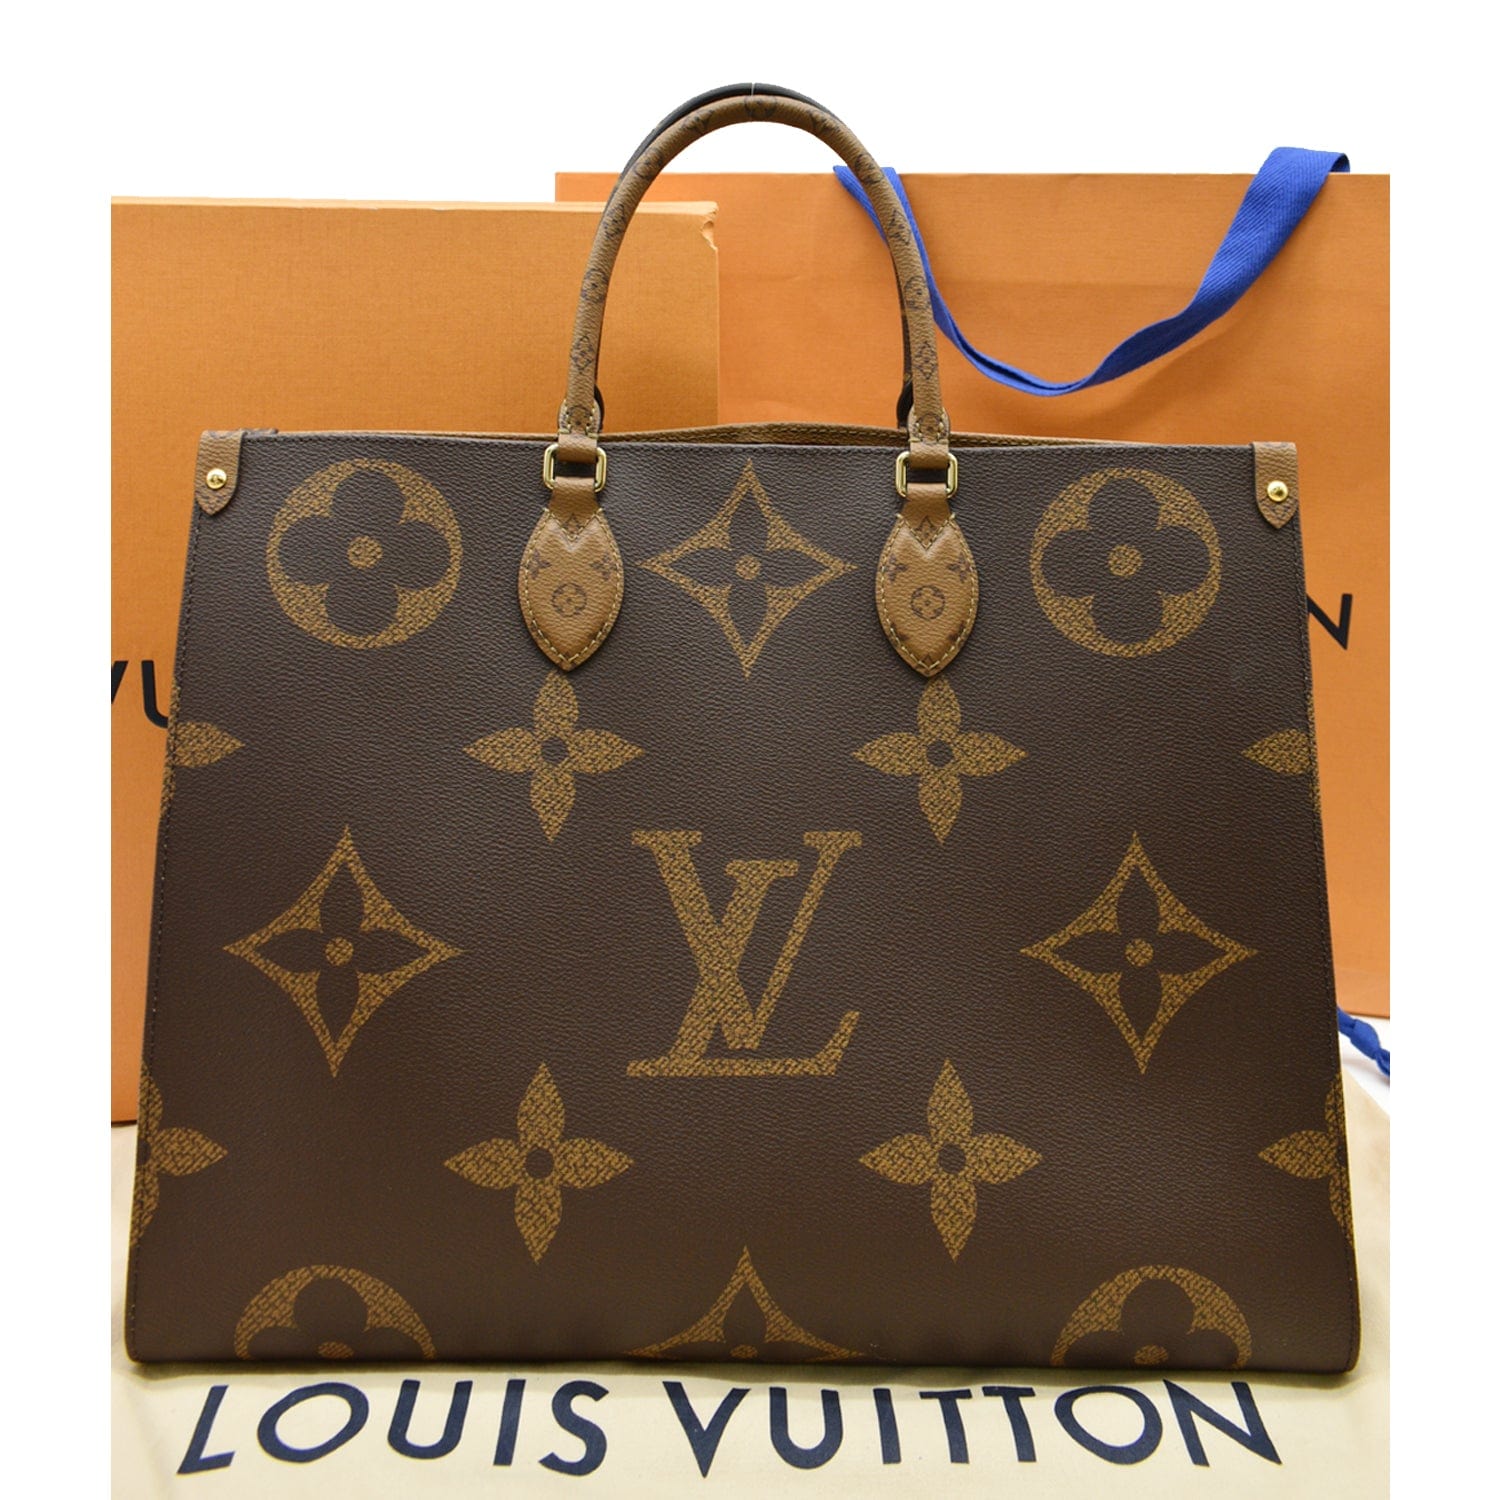 Louis Vuitton LV Tote Shoulder Bag Big Size in Monogram #1508-1 HG